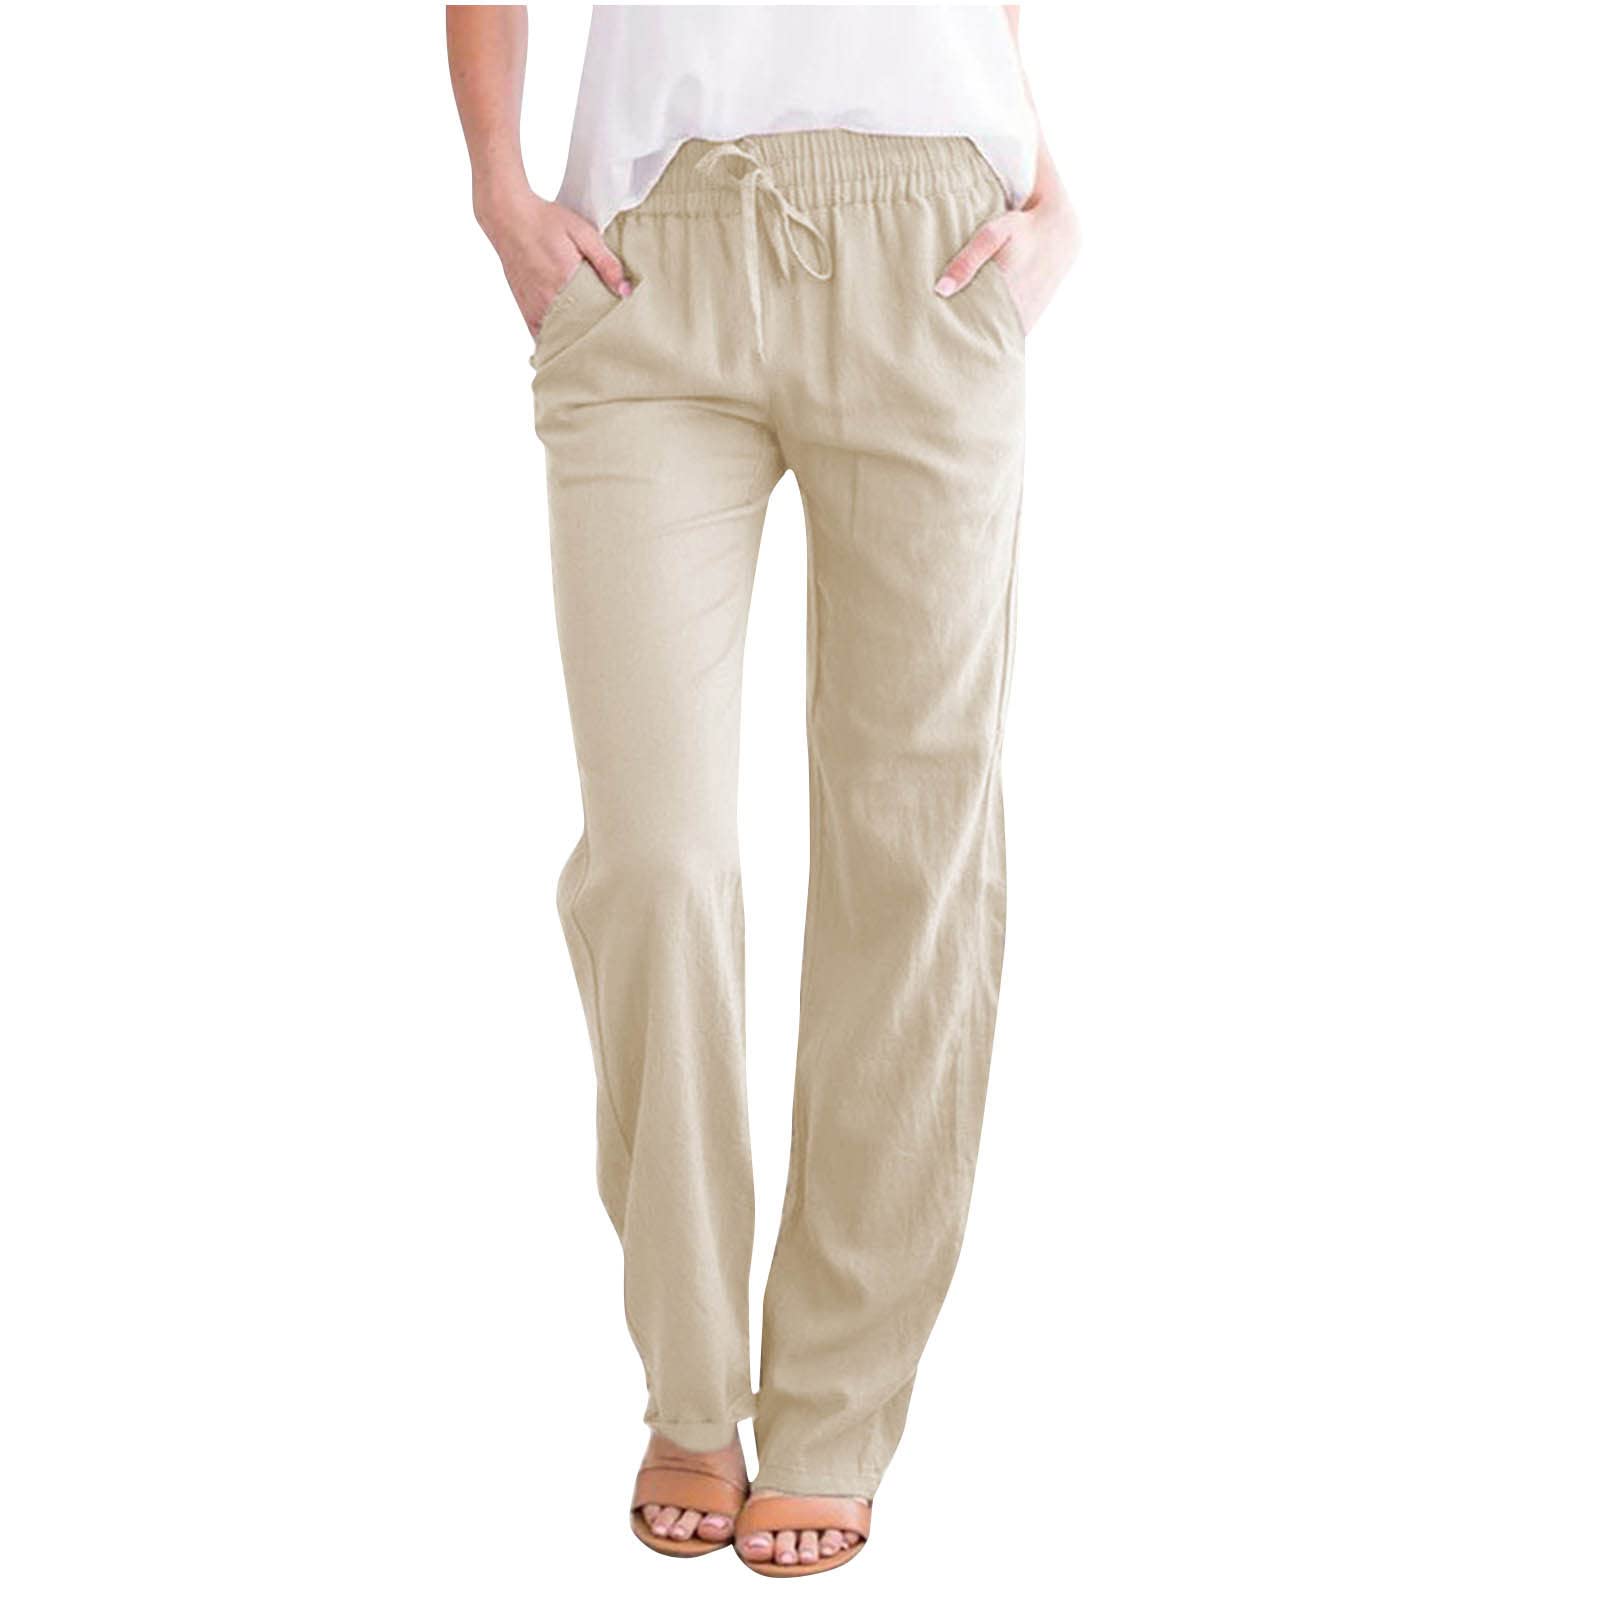 Summer Pants For Women Casual Lightweight Women Casual Solid Cotton Linen  Drawstring Elastic Waist Calf-Length Pencil Pants Black S